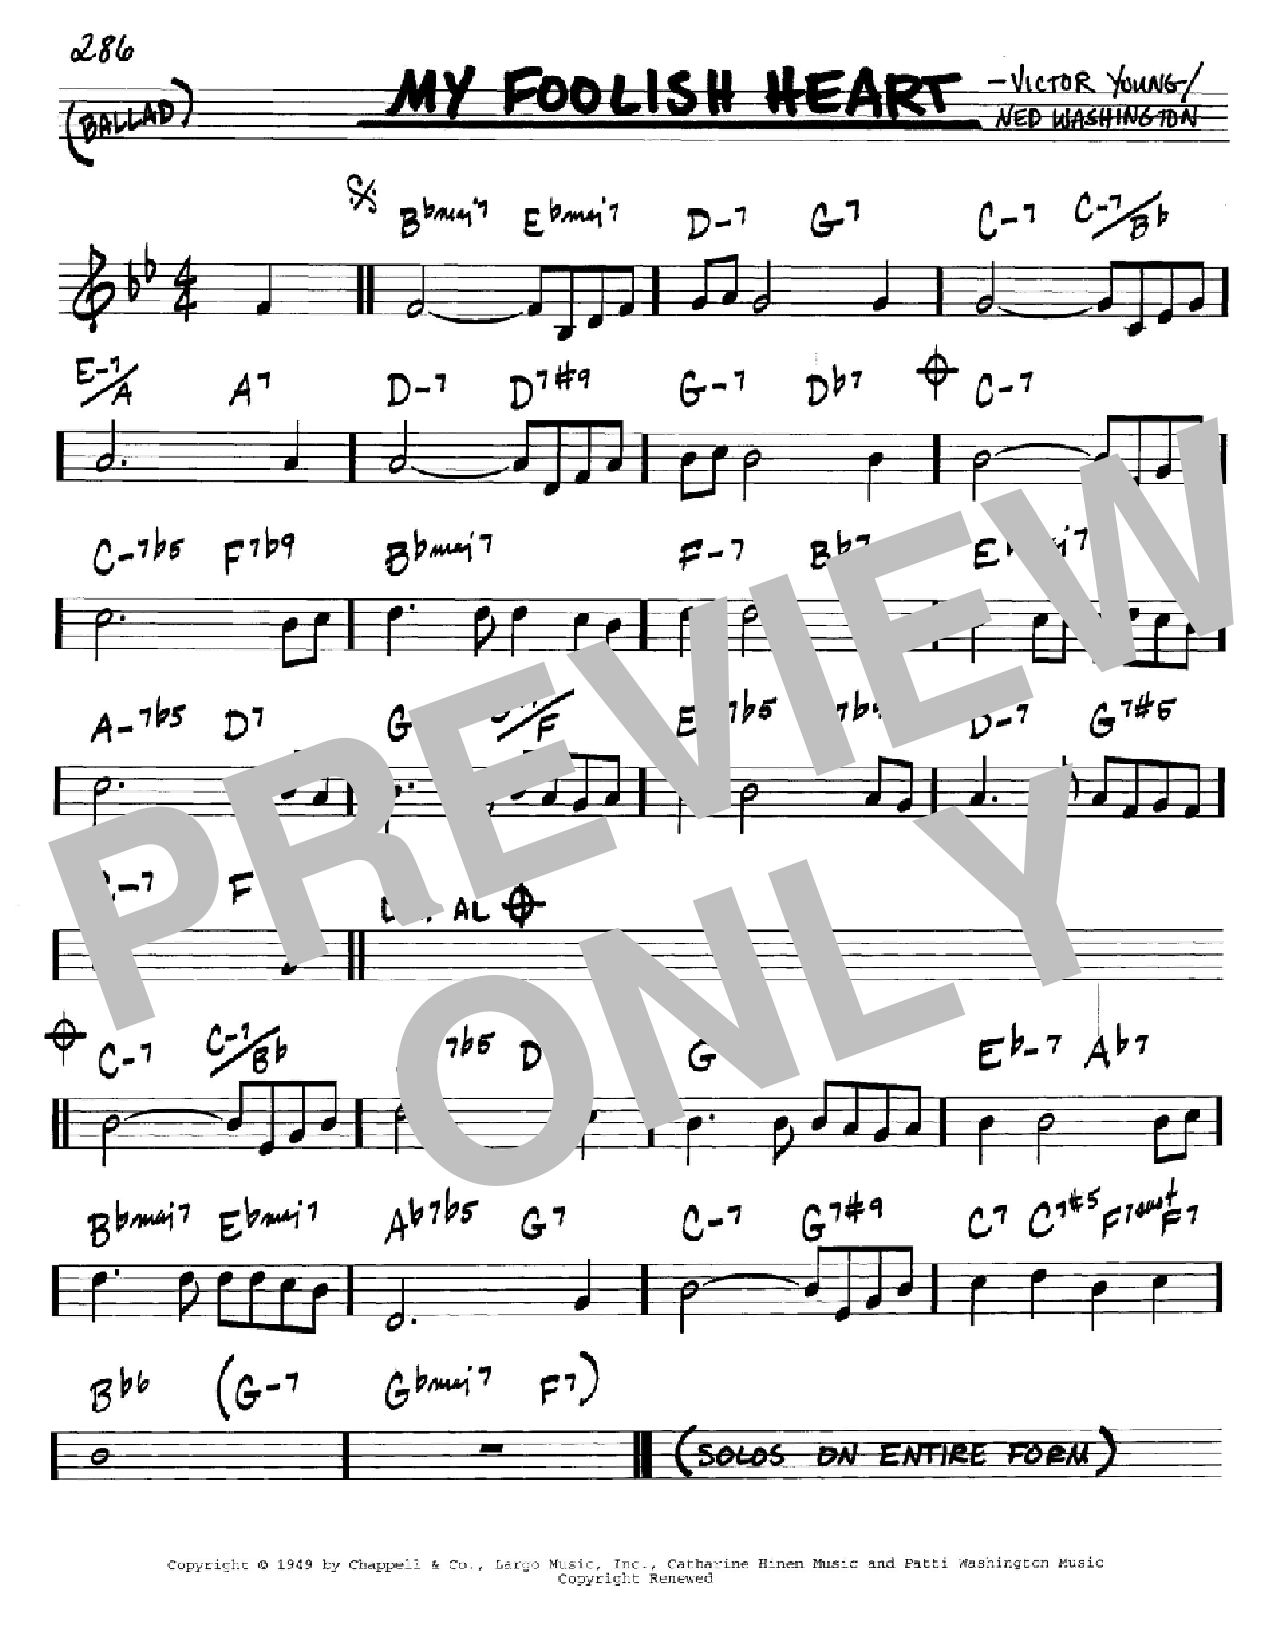 Ned Washington My Foolish Heart Sheet Music Notes & Chords for Guitar Tab - Download or Print PDF